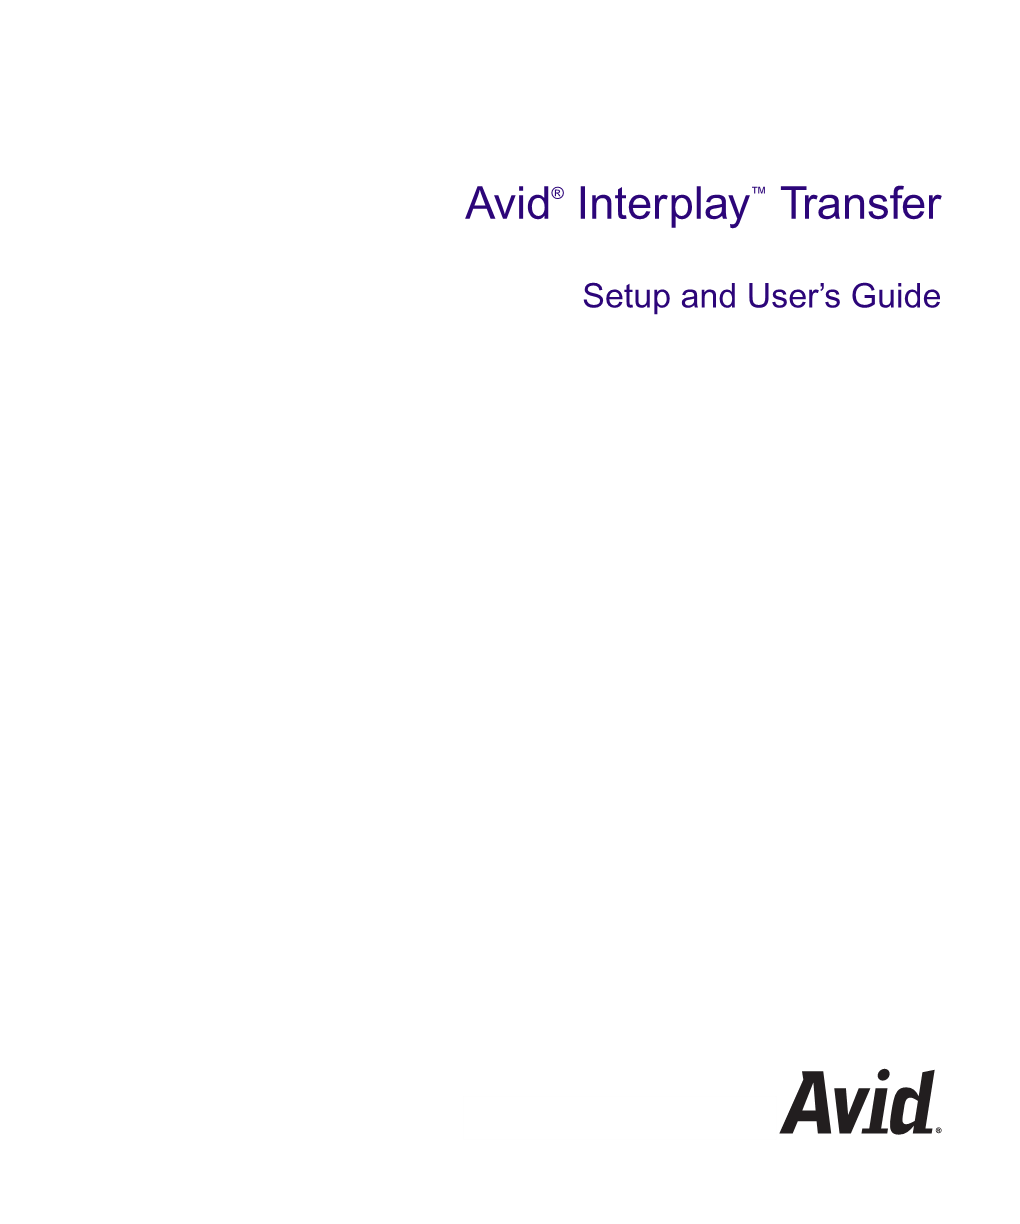 Avid Interplay Transfer Setup and User's Guide